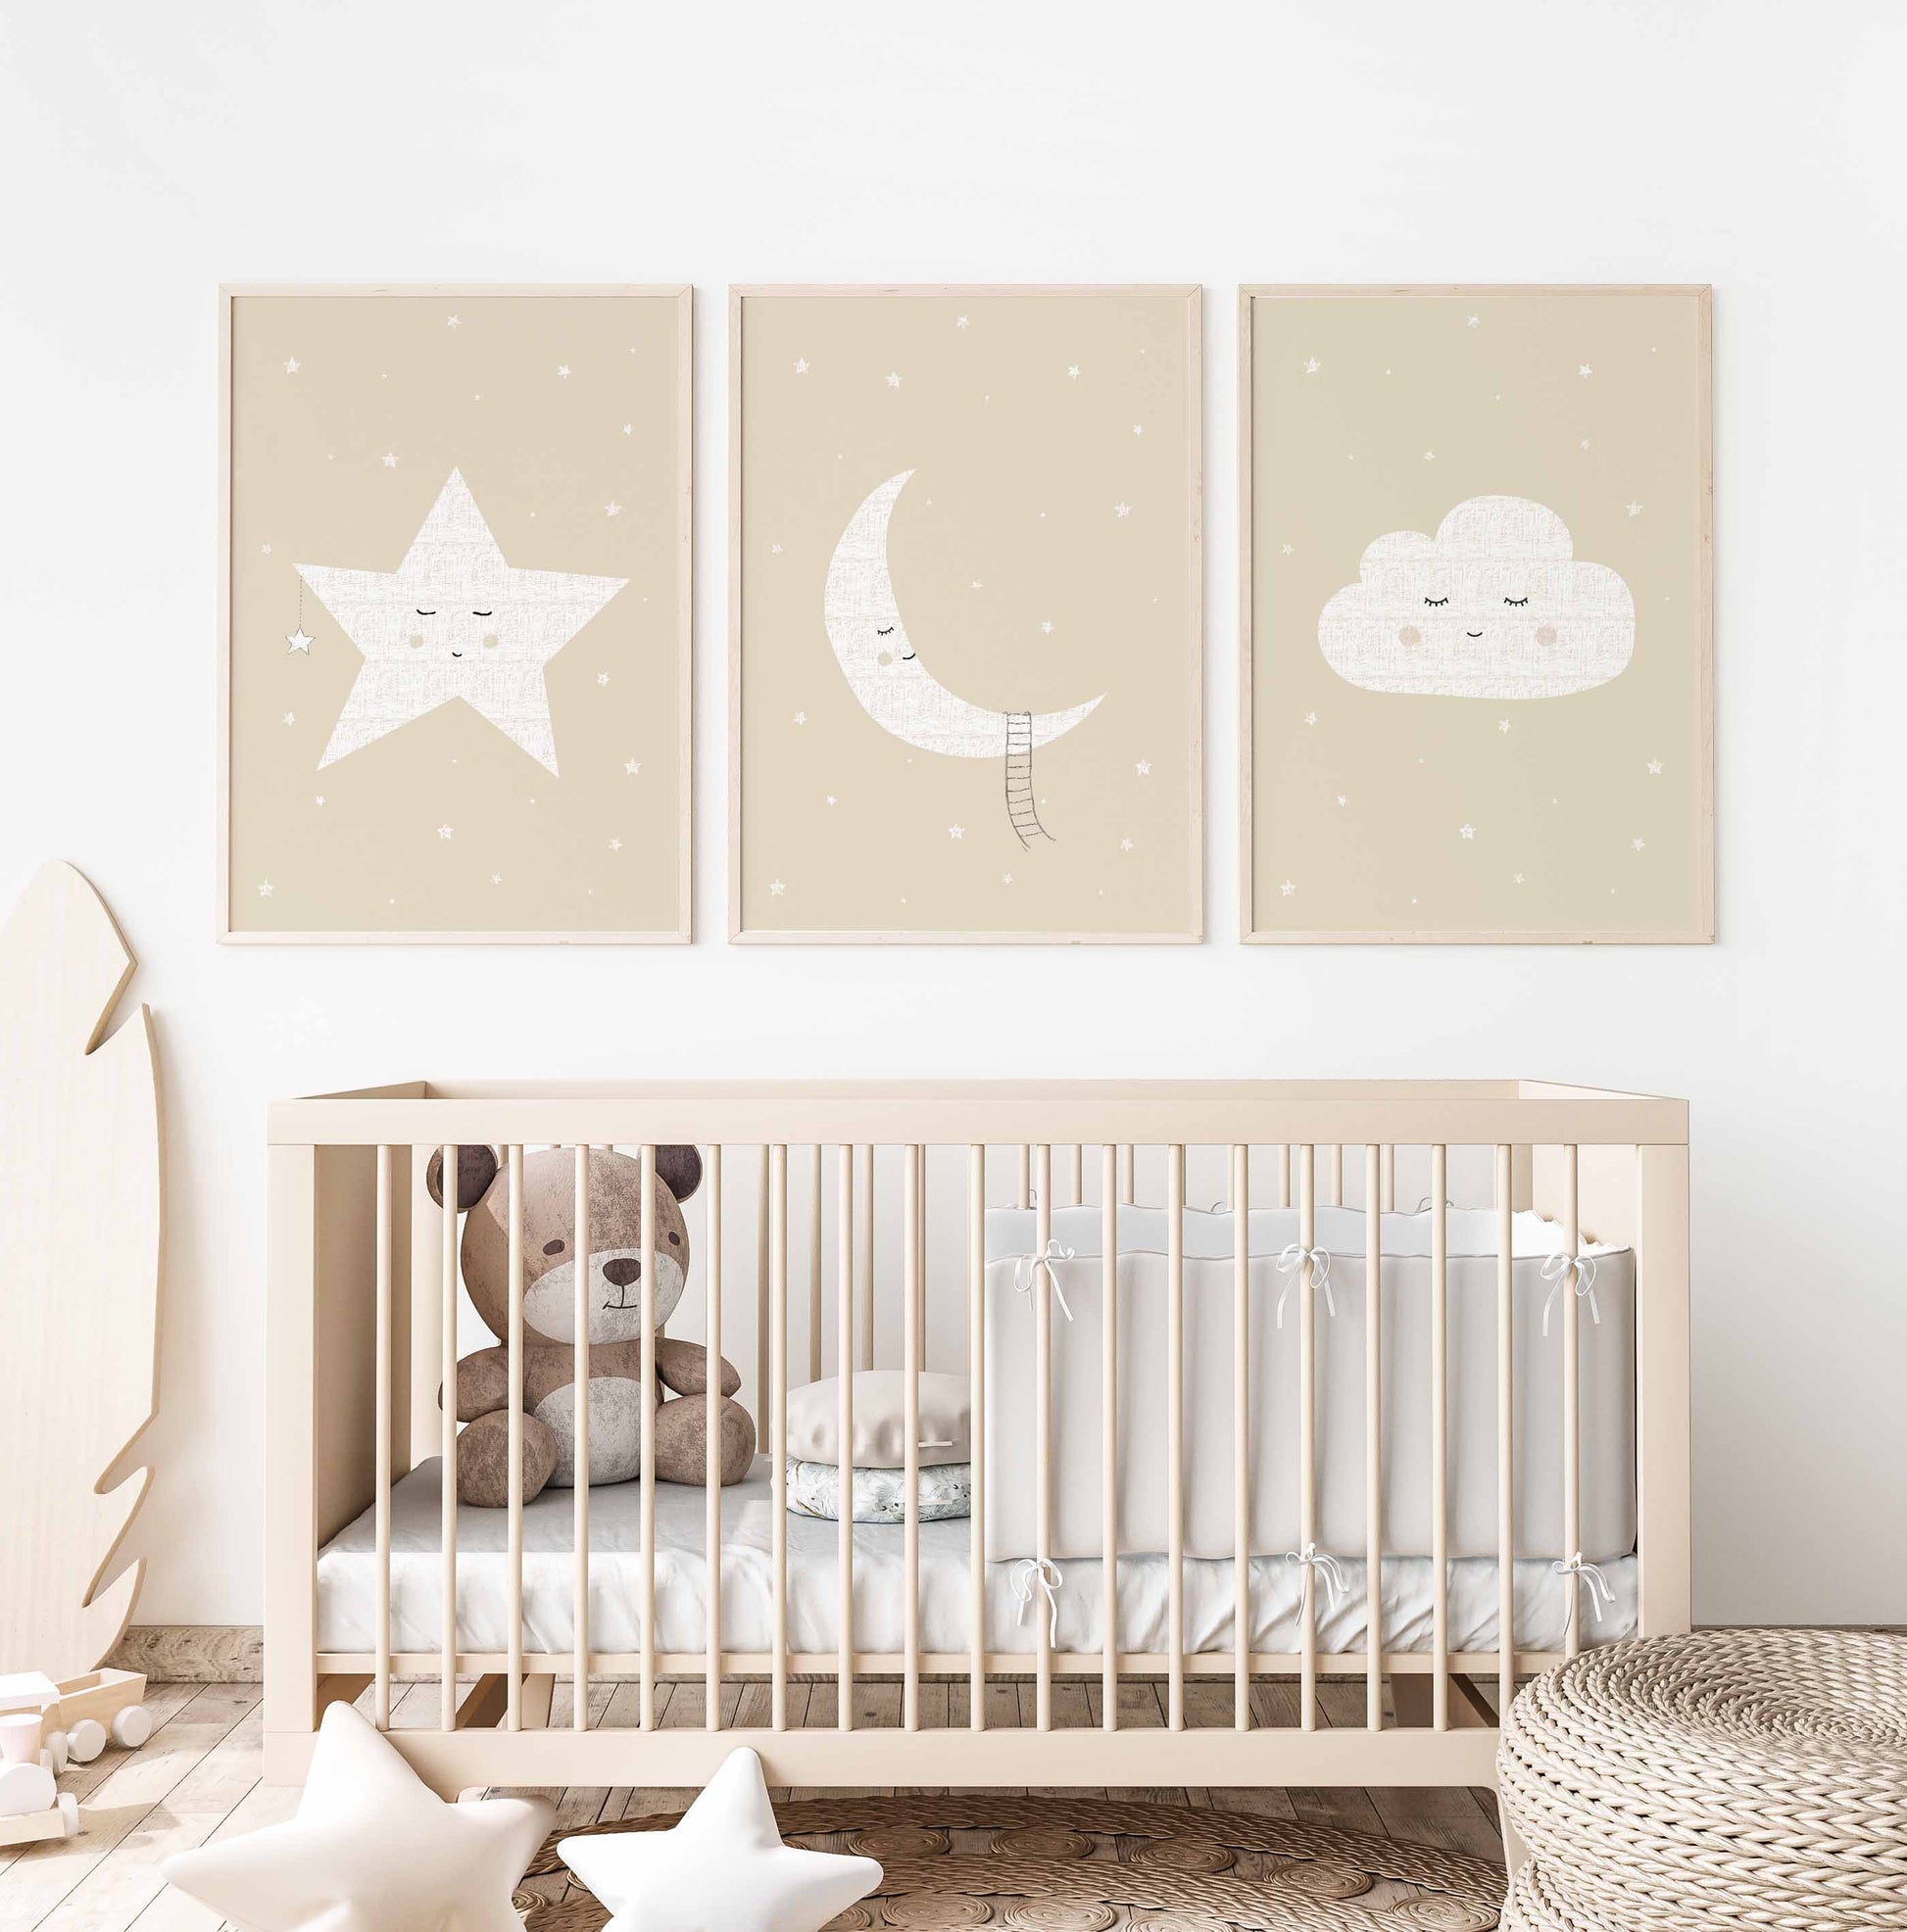 Beige nursery prints in a set of 3, moon, star and cloud designs